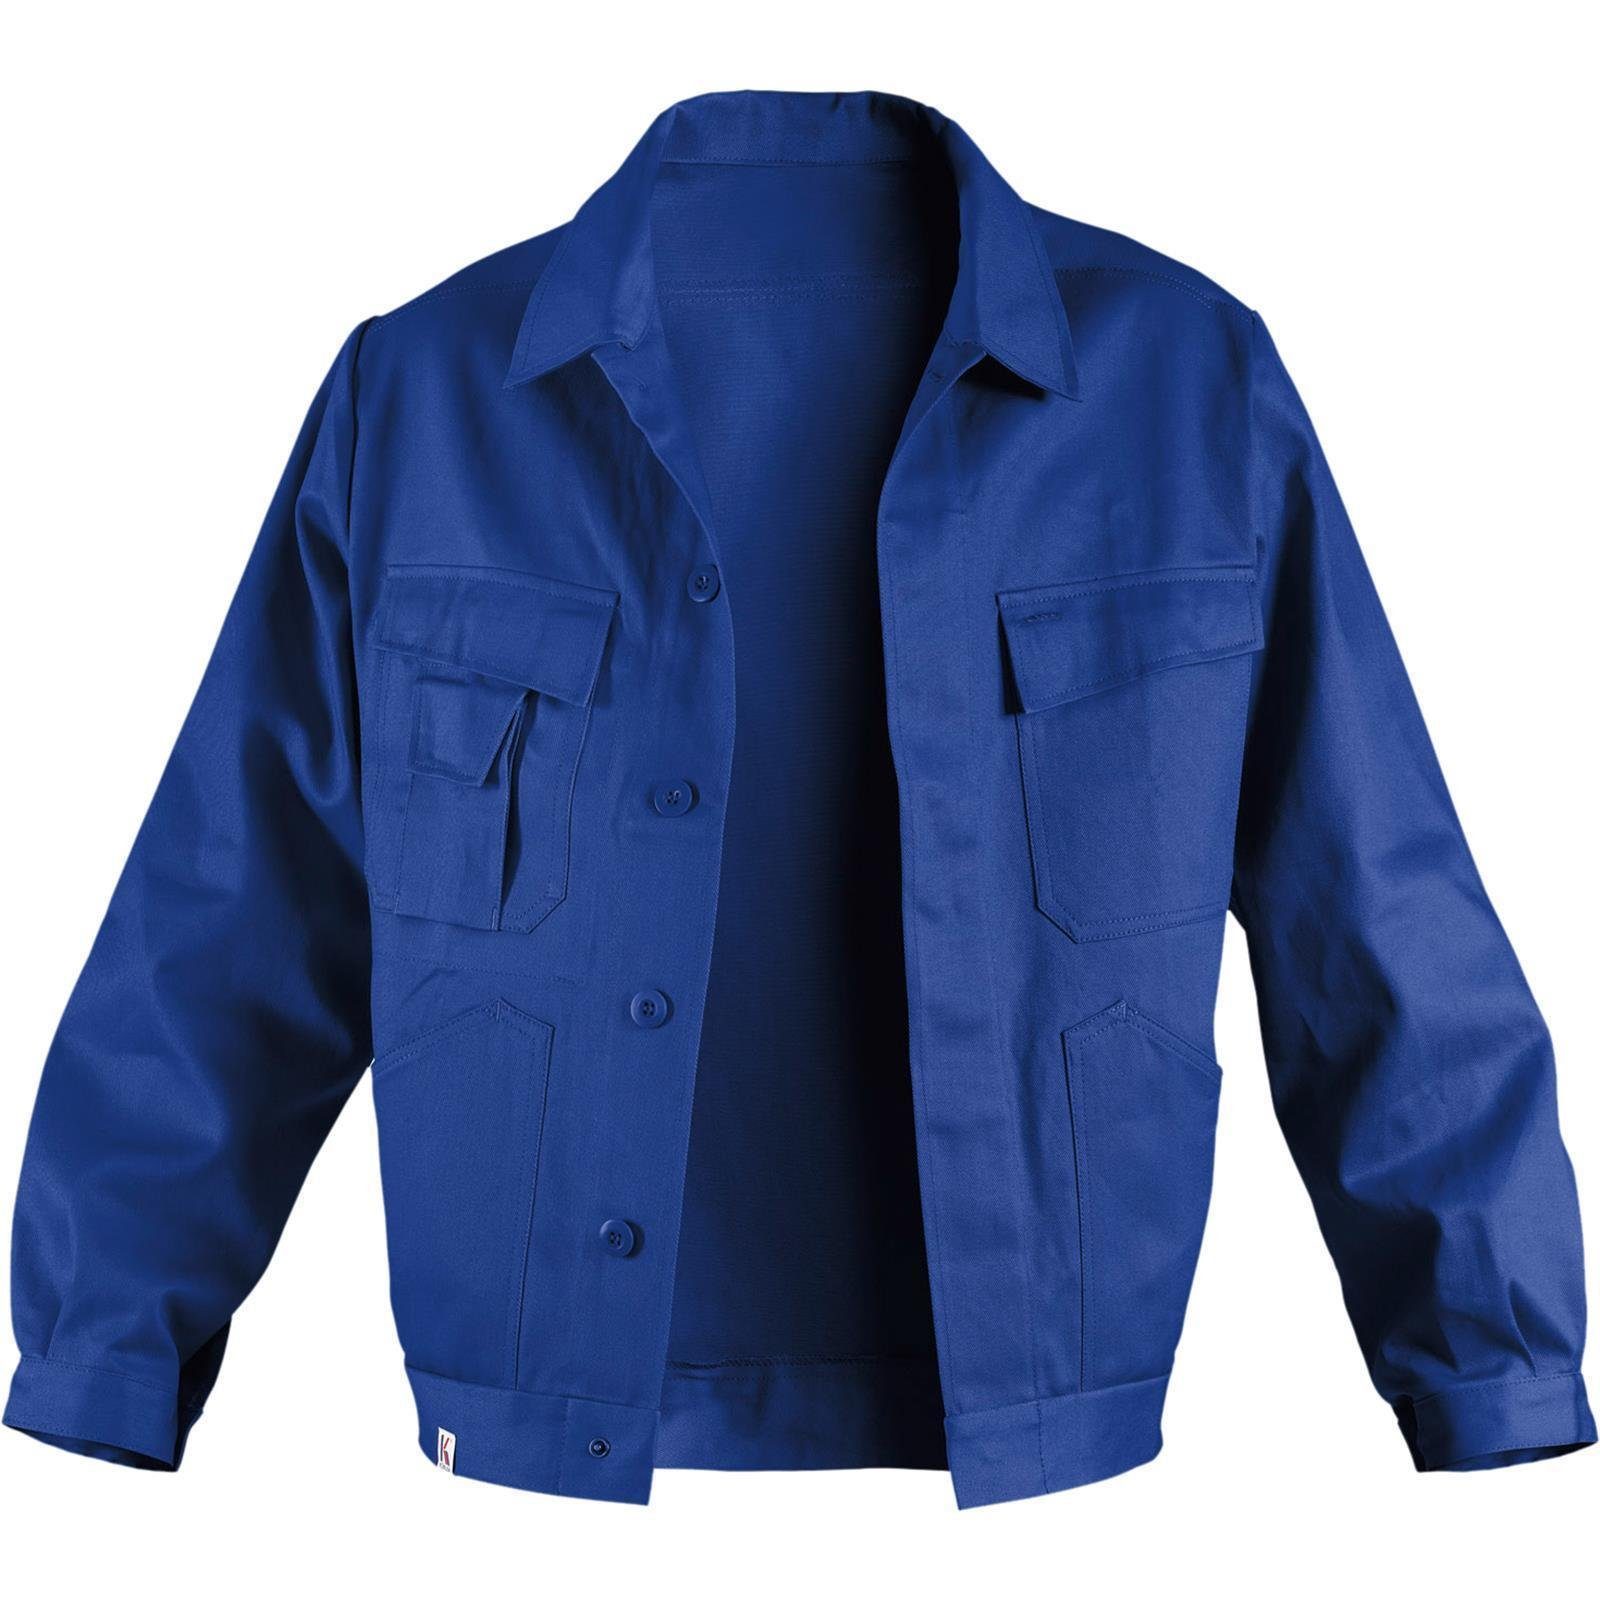 Kübler Arbeitsjacke Kübler Jacke kornblau 100%Baumwolle